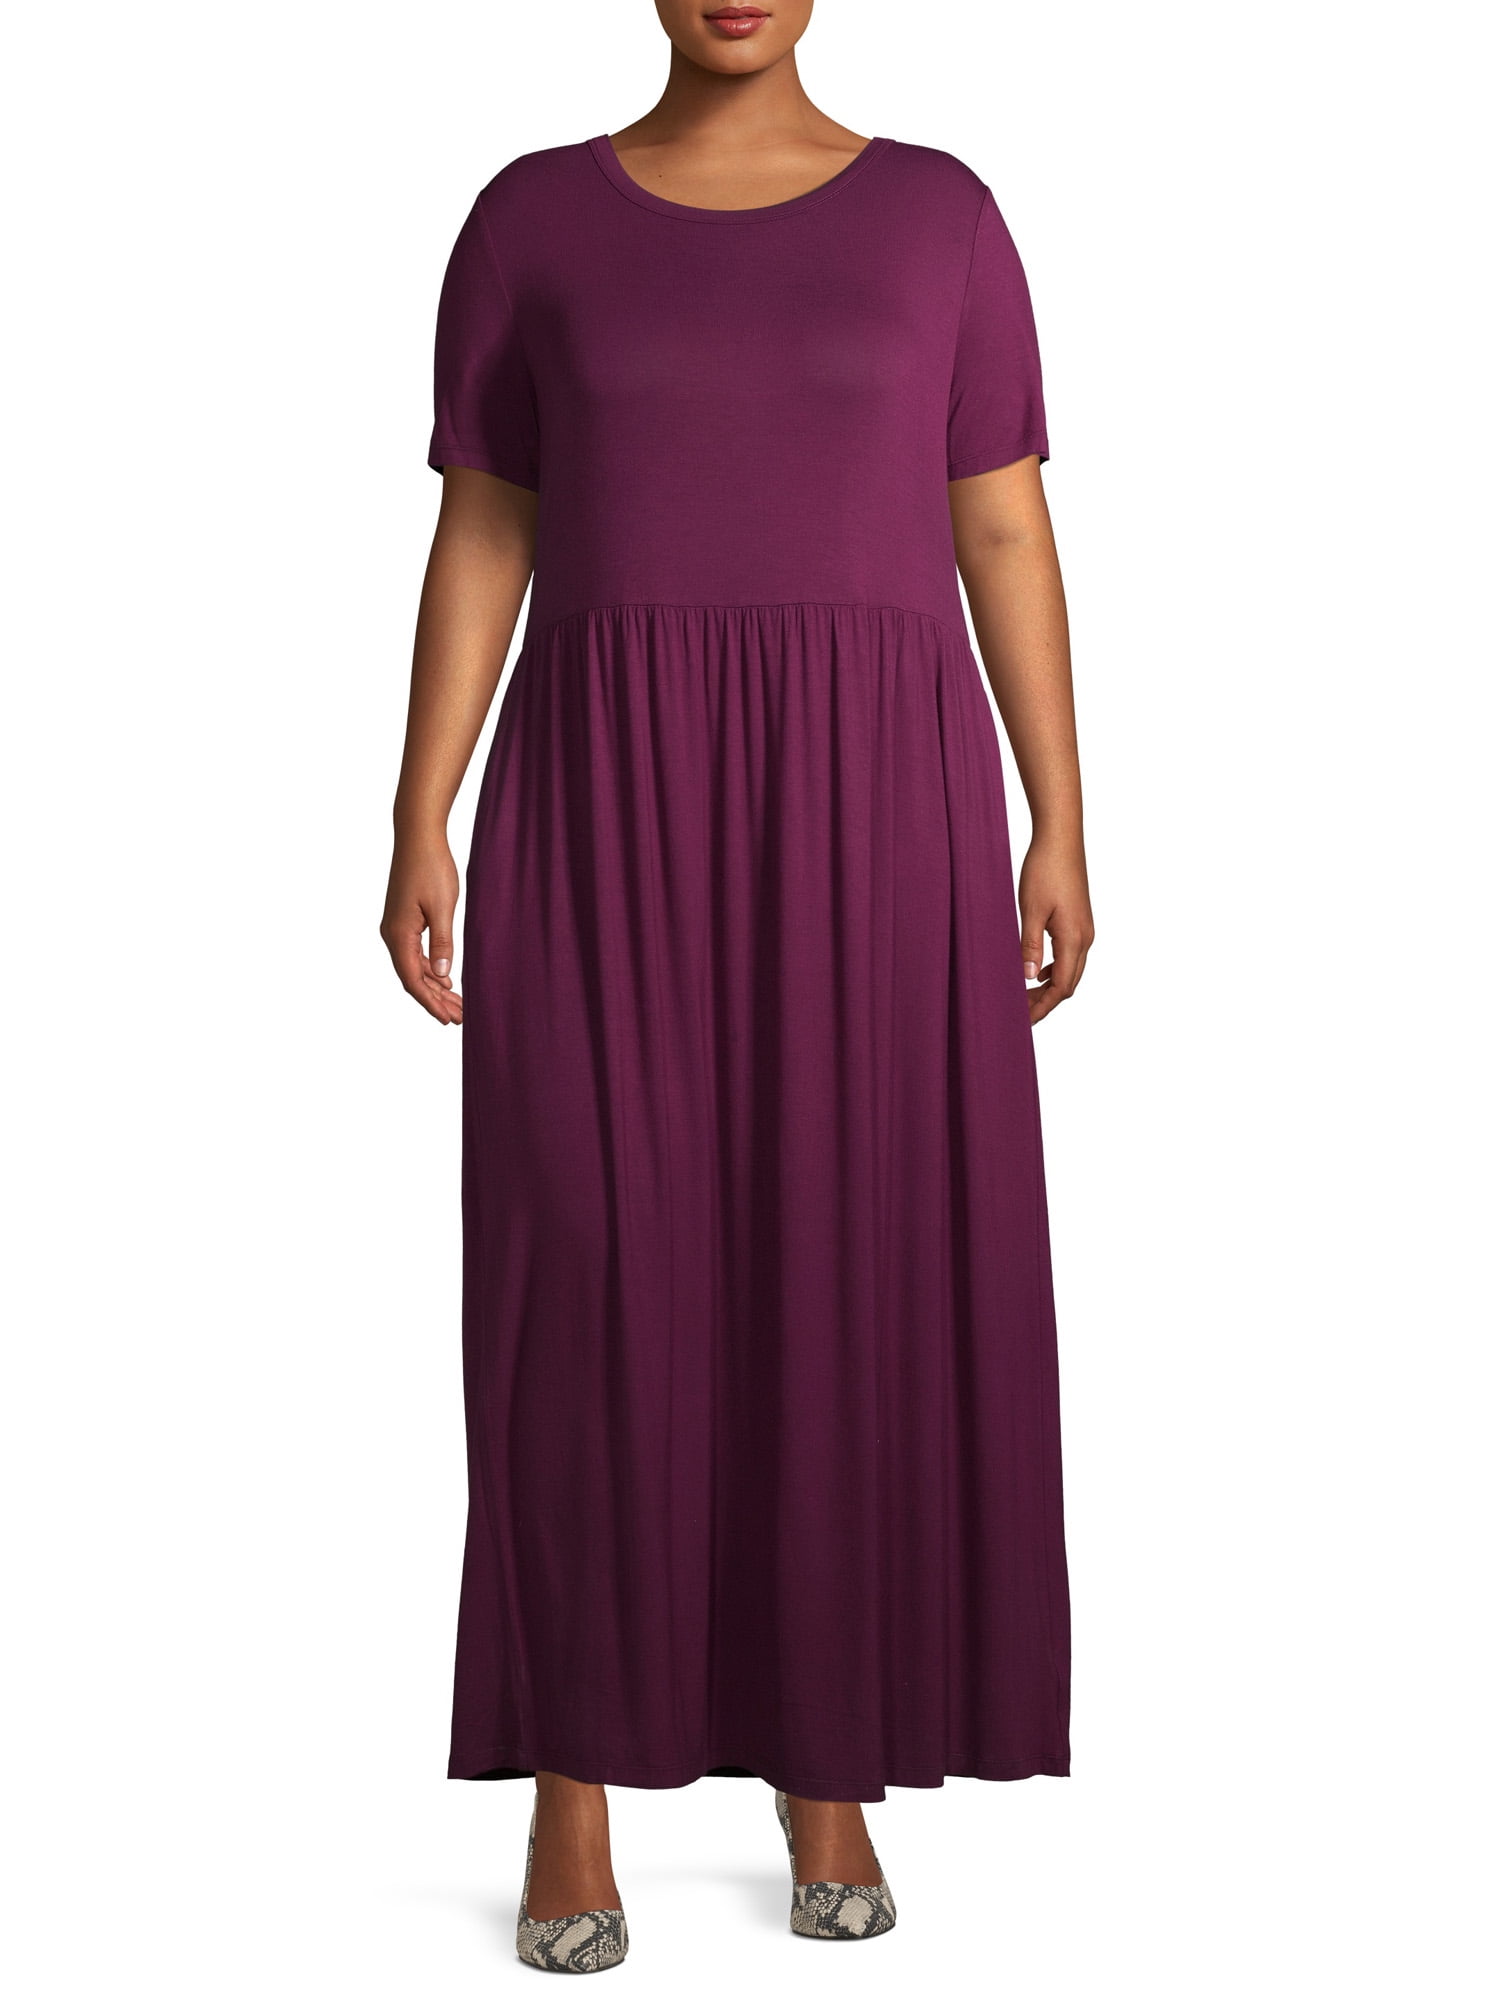 Terra & Sky Women's Plus Size Maxi Dress with Pockets - Walmart.com